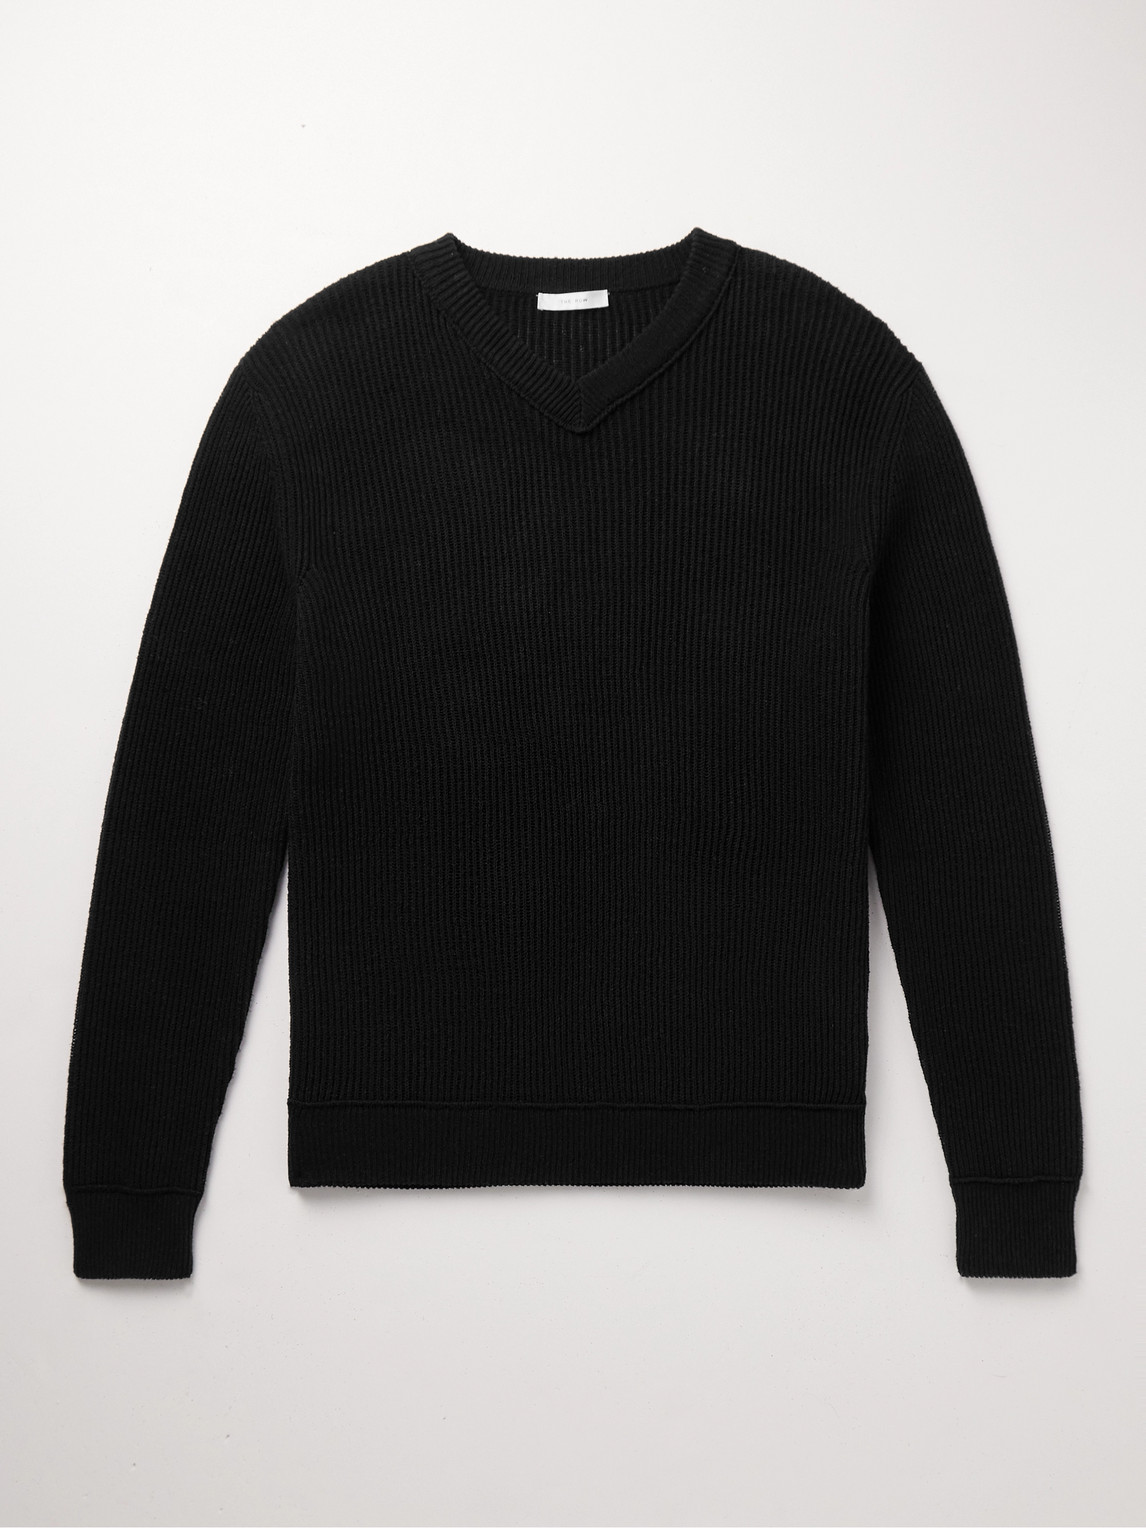 The Row - Corbin Ribbed Cotton Sweater - Men - Black - S von The Row